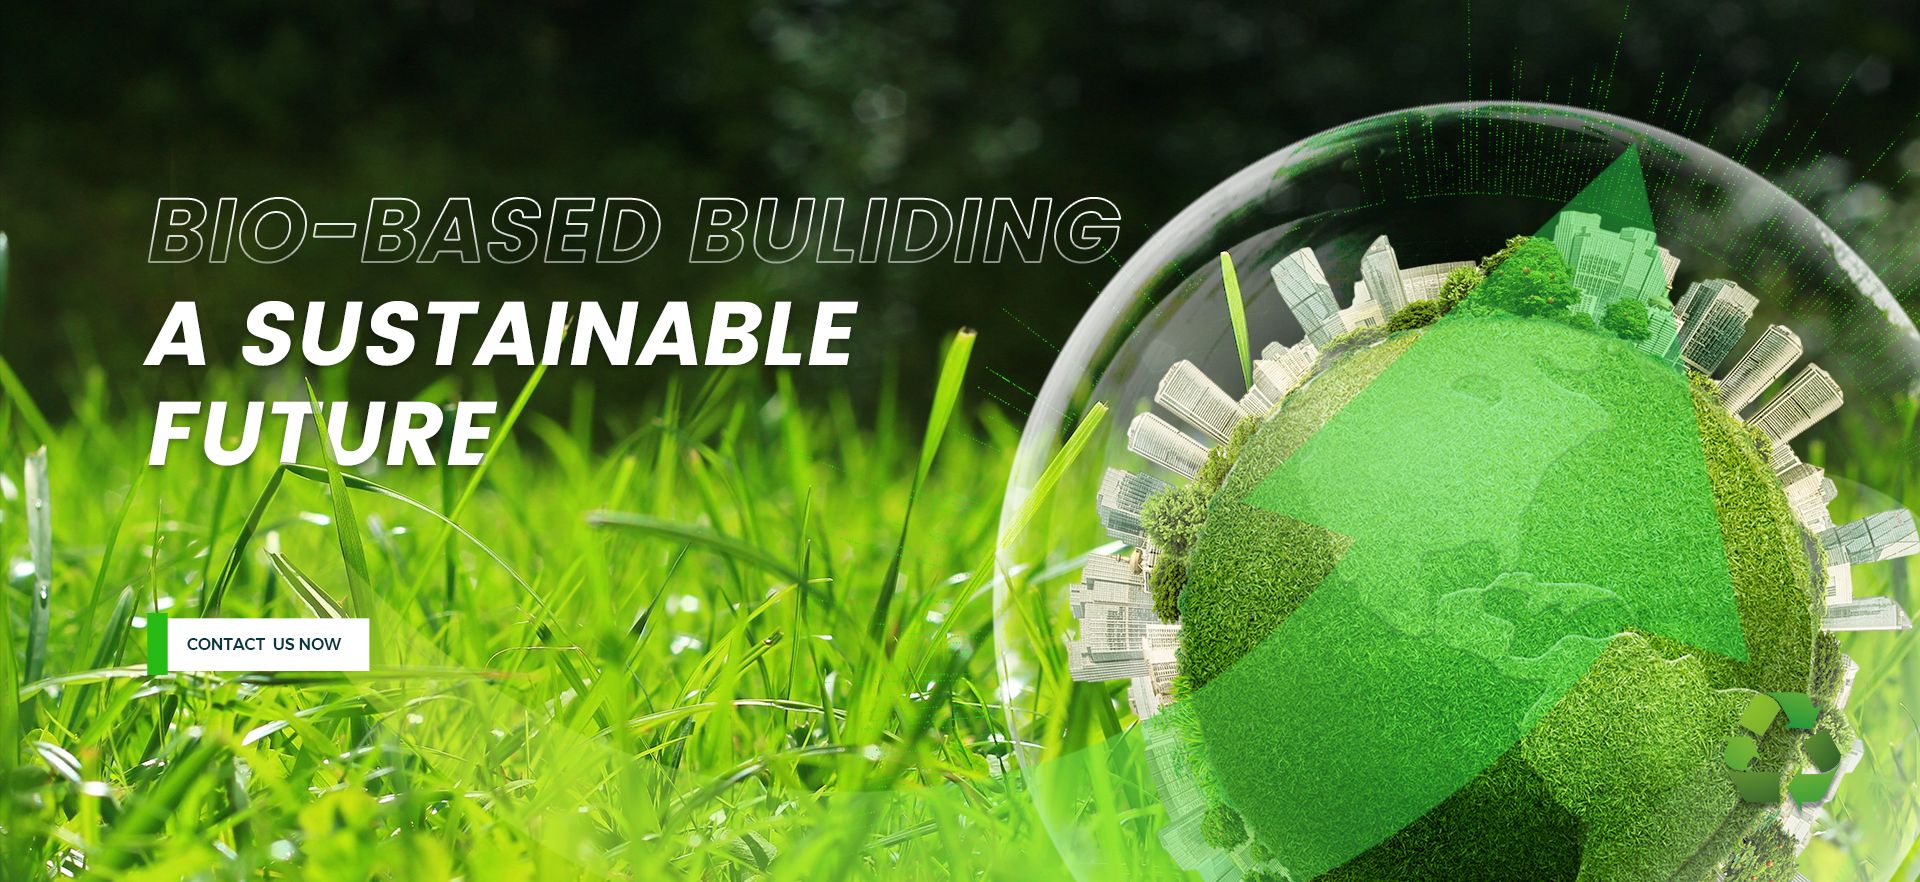 Eude Foam Bio-based Building a Sustainable Future